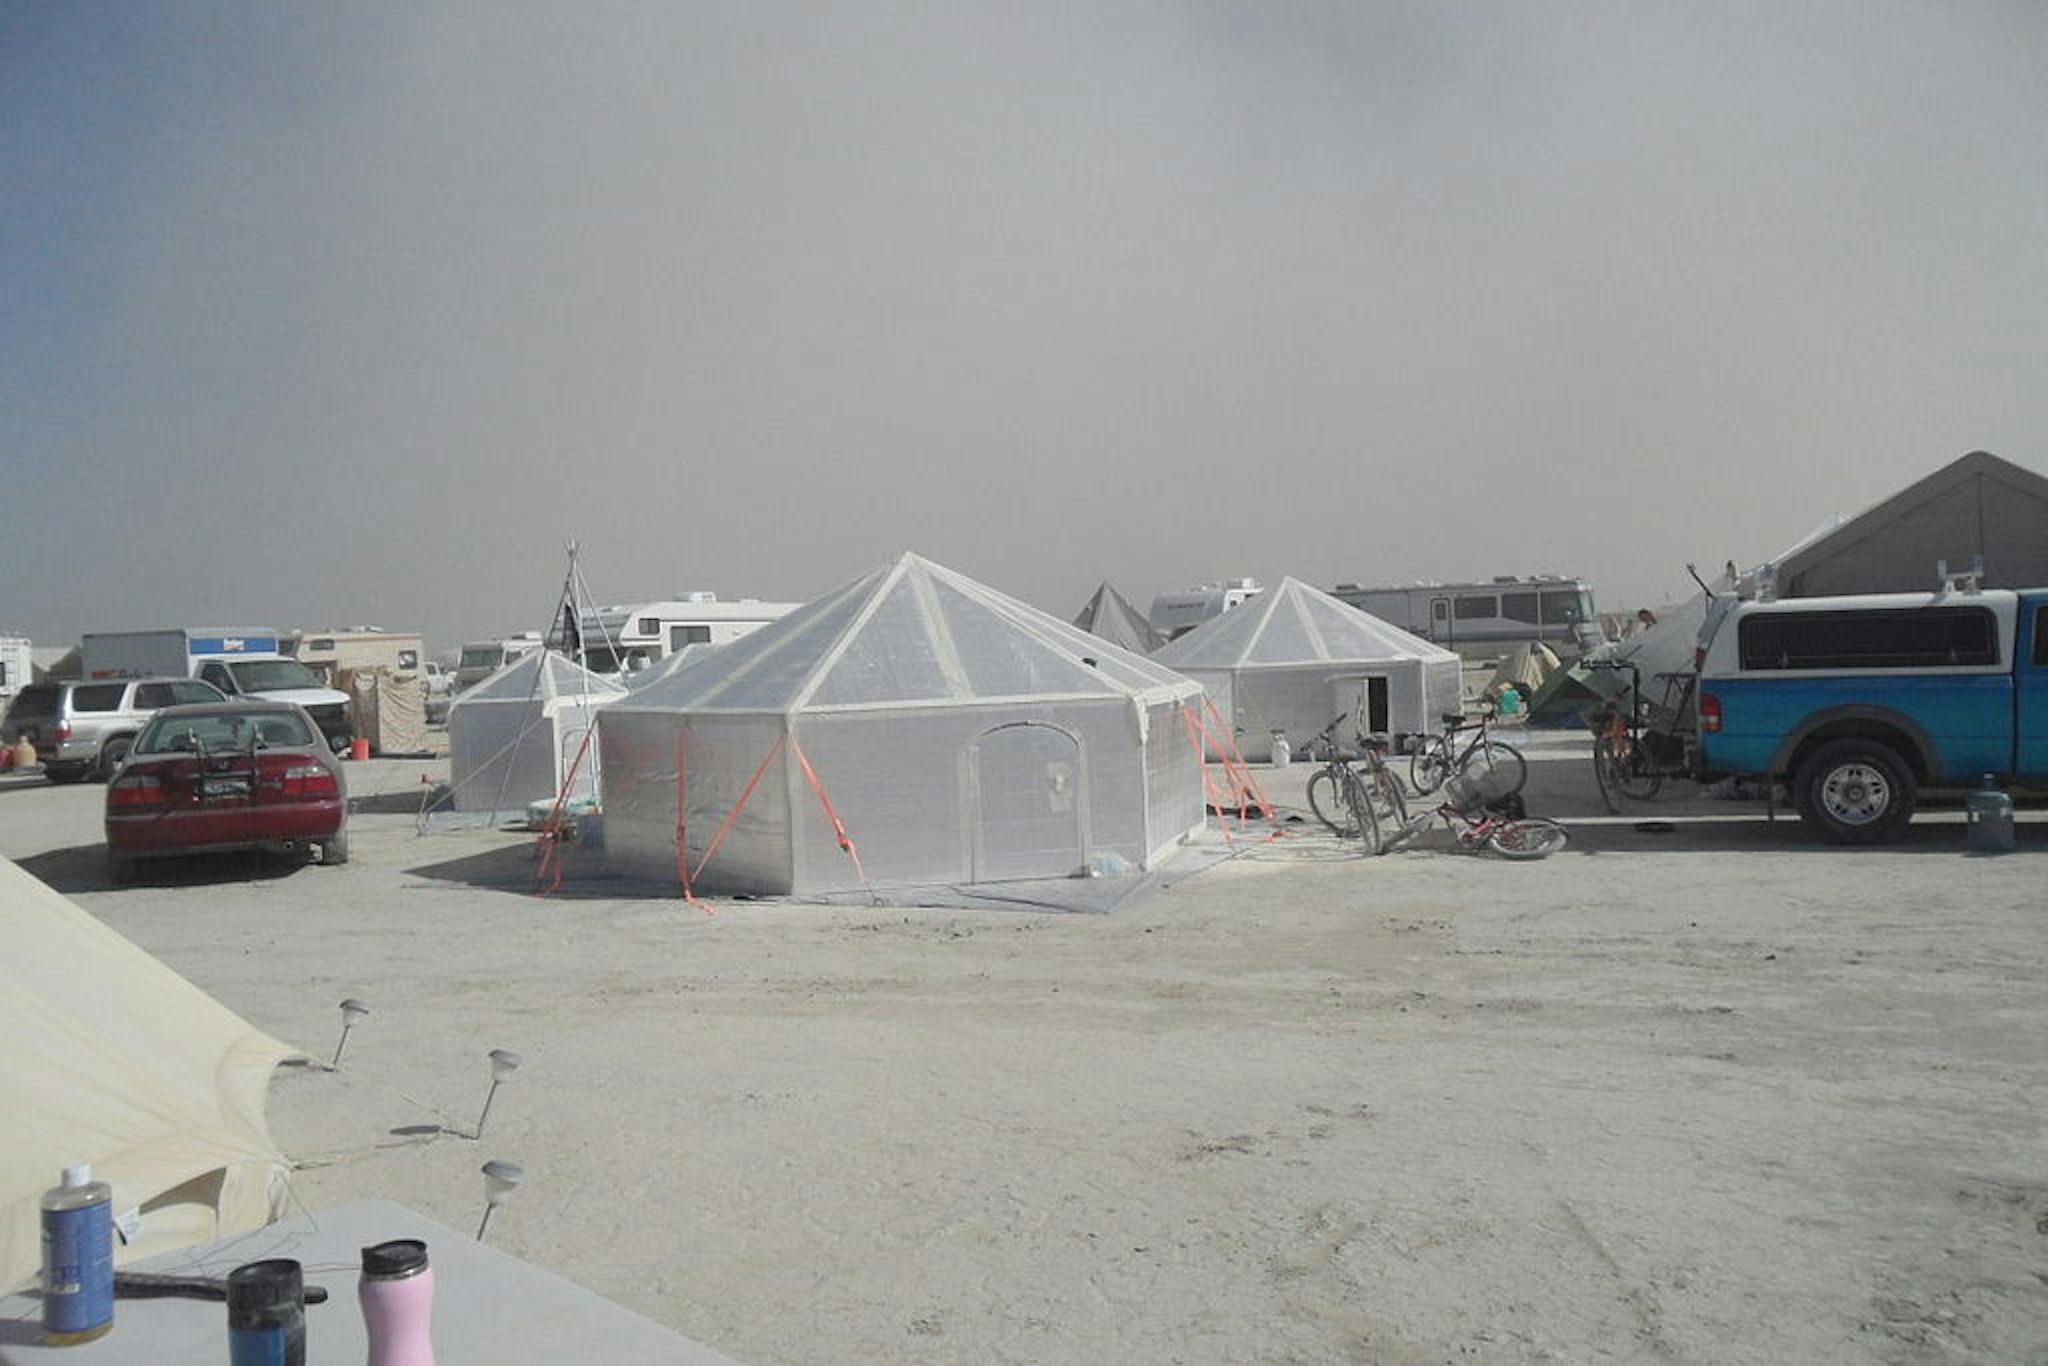 Hexayurt at Burning Man, 2010